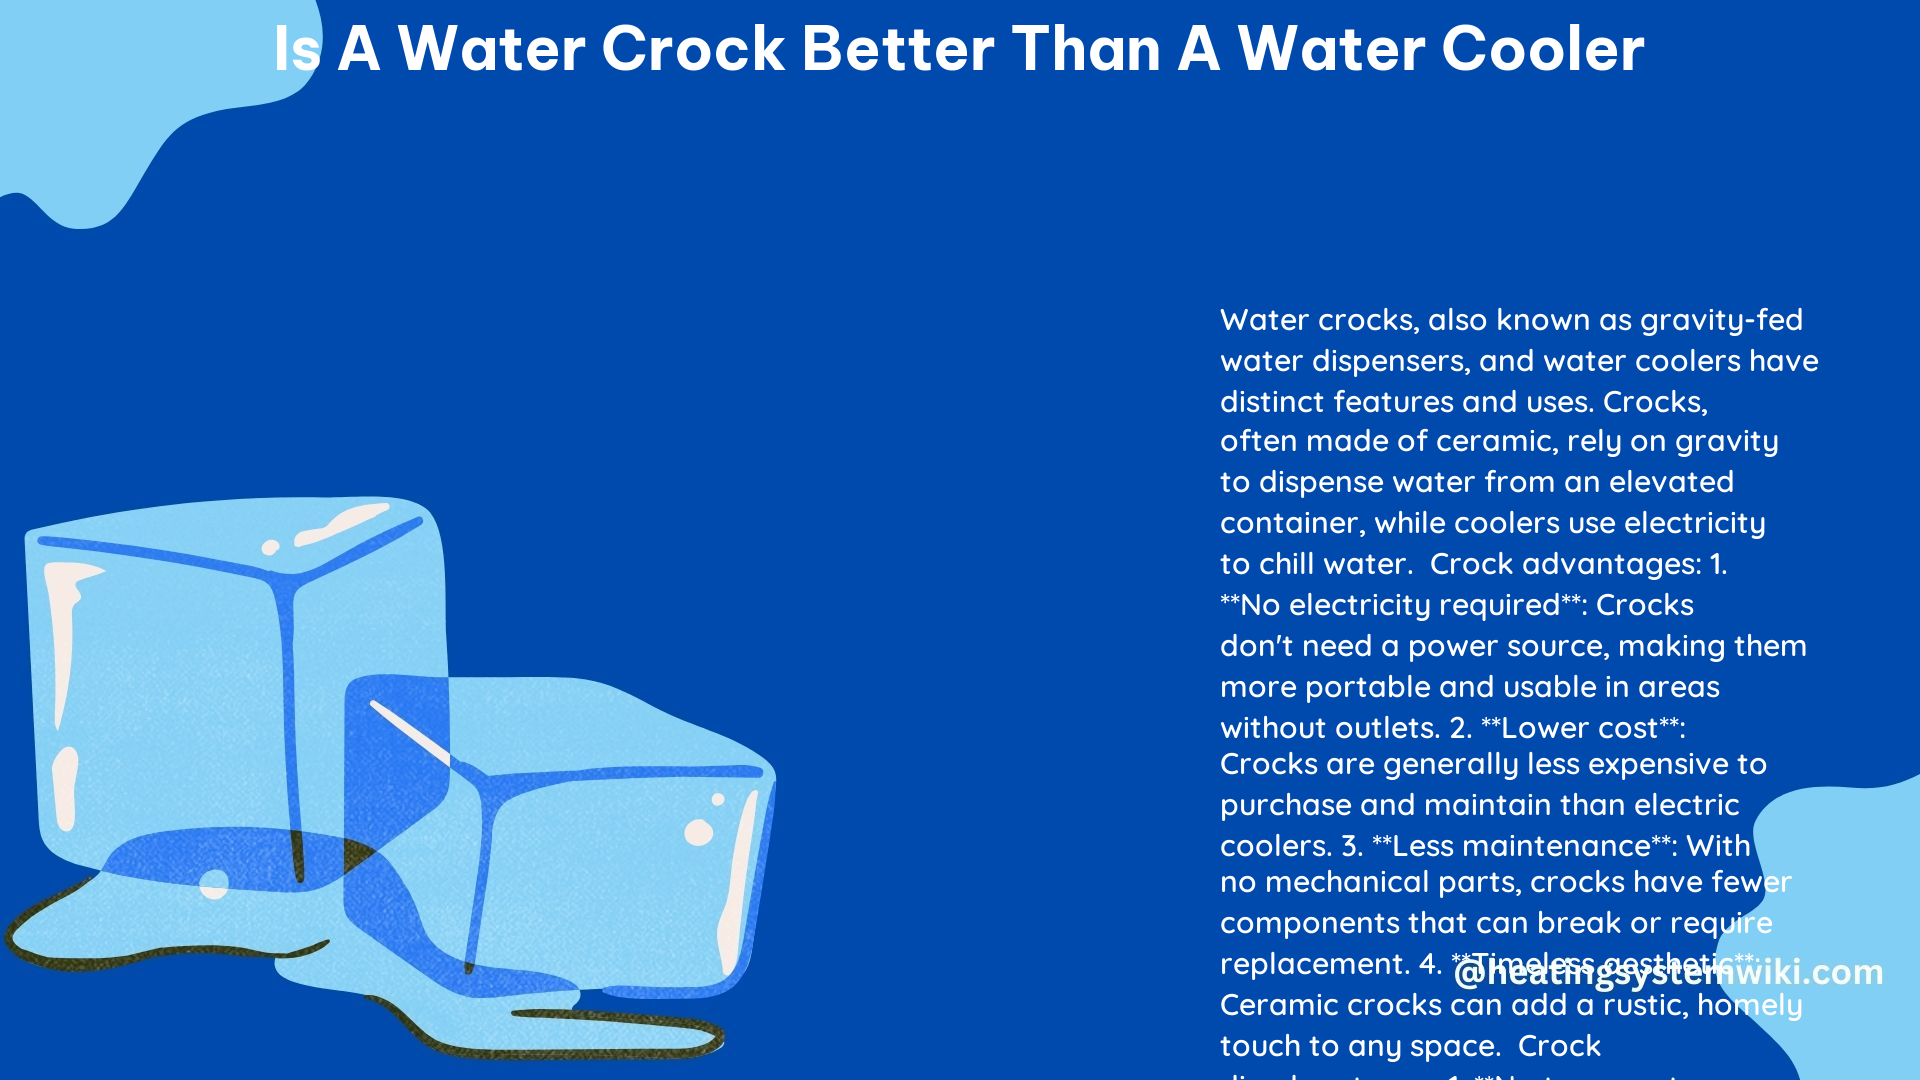 Is a Water Crock Better Than a Water Cooler